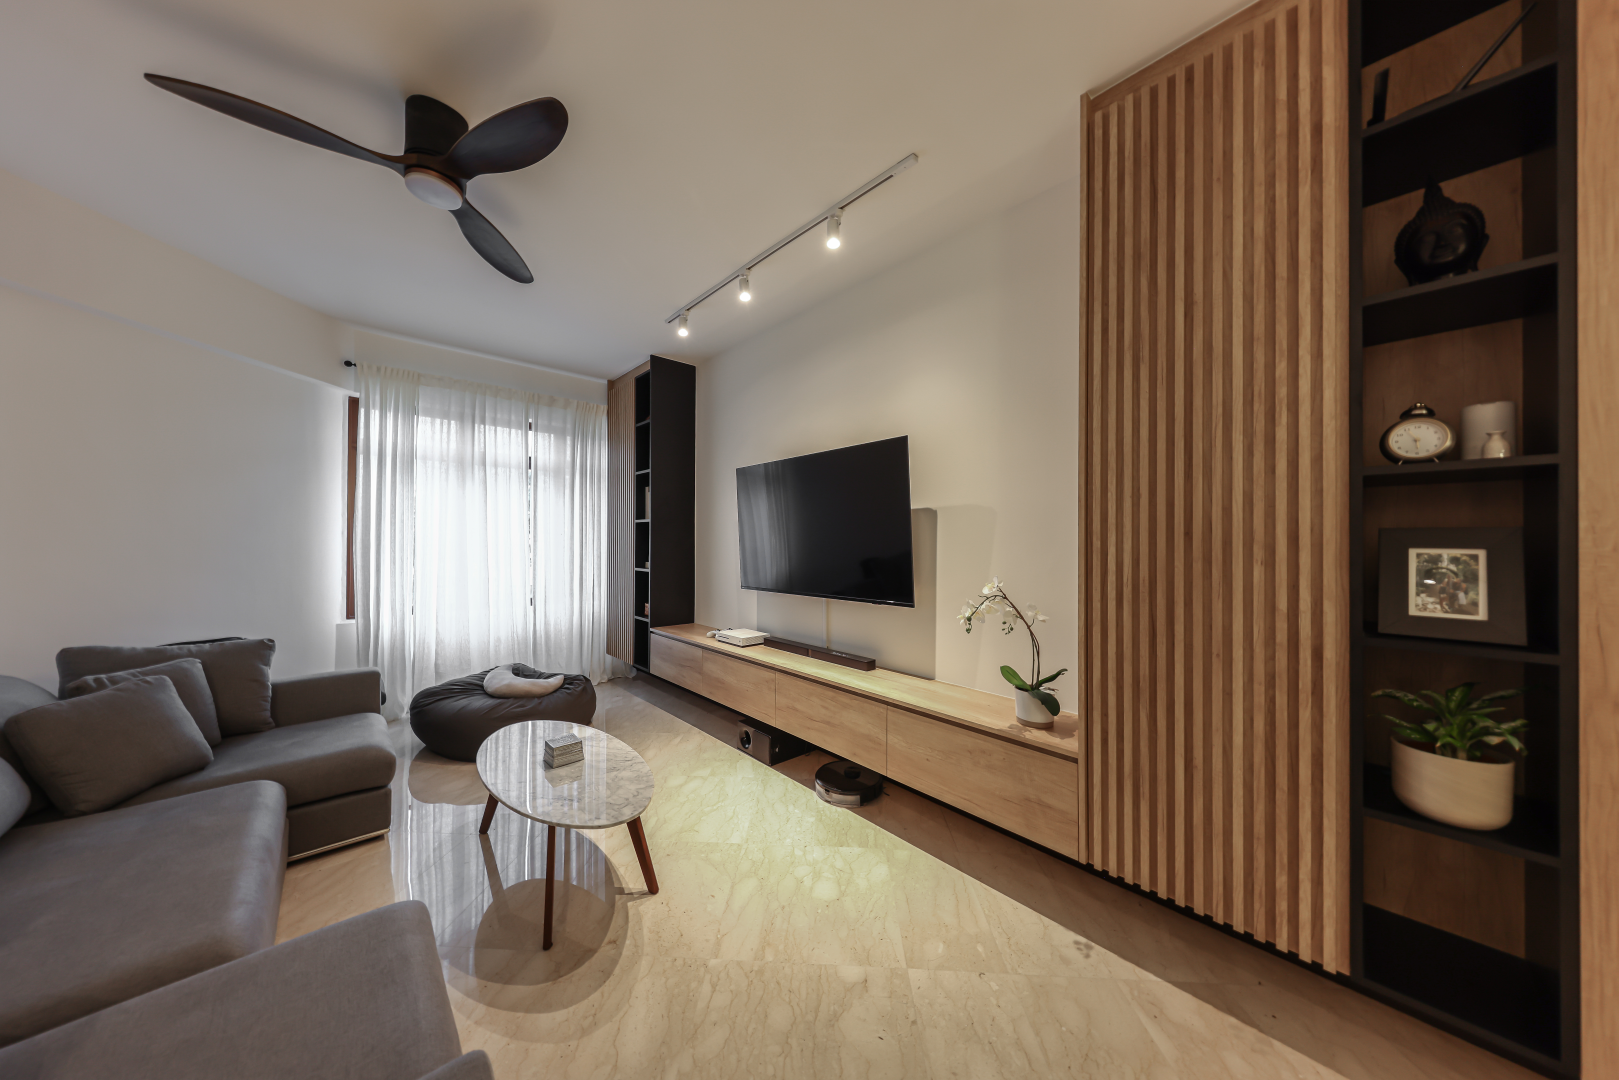 Home - Function Creative Interior Design